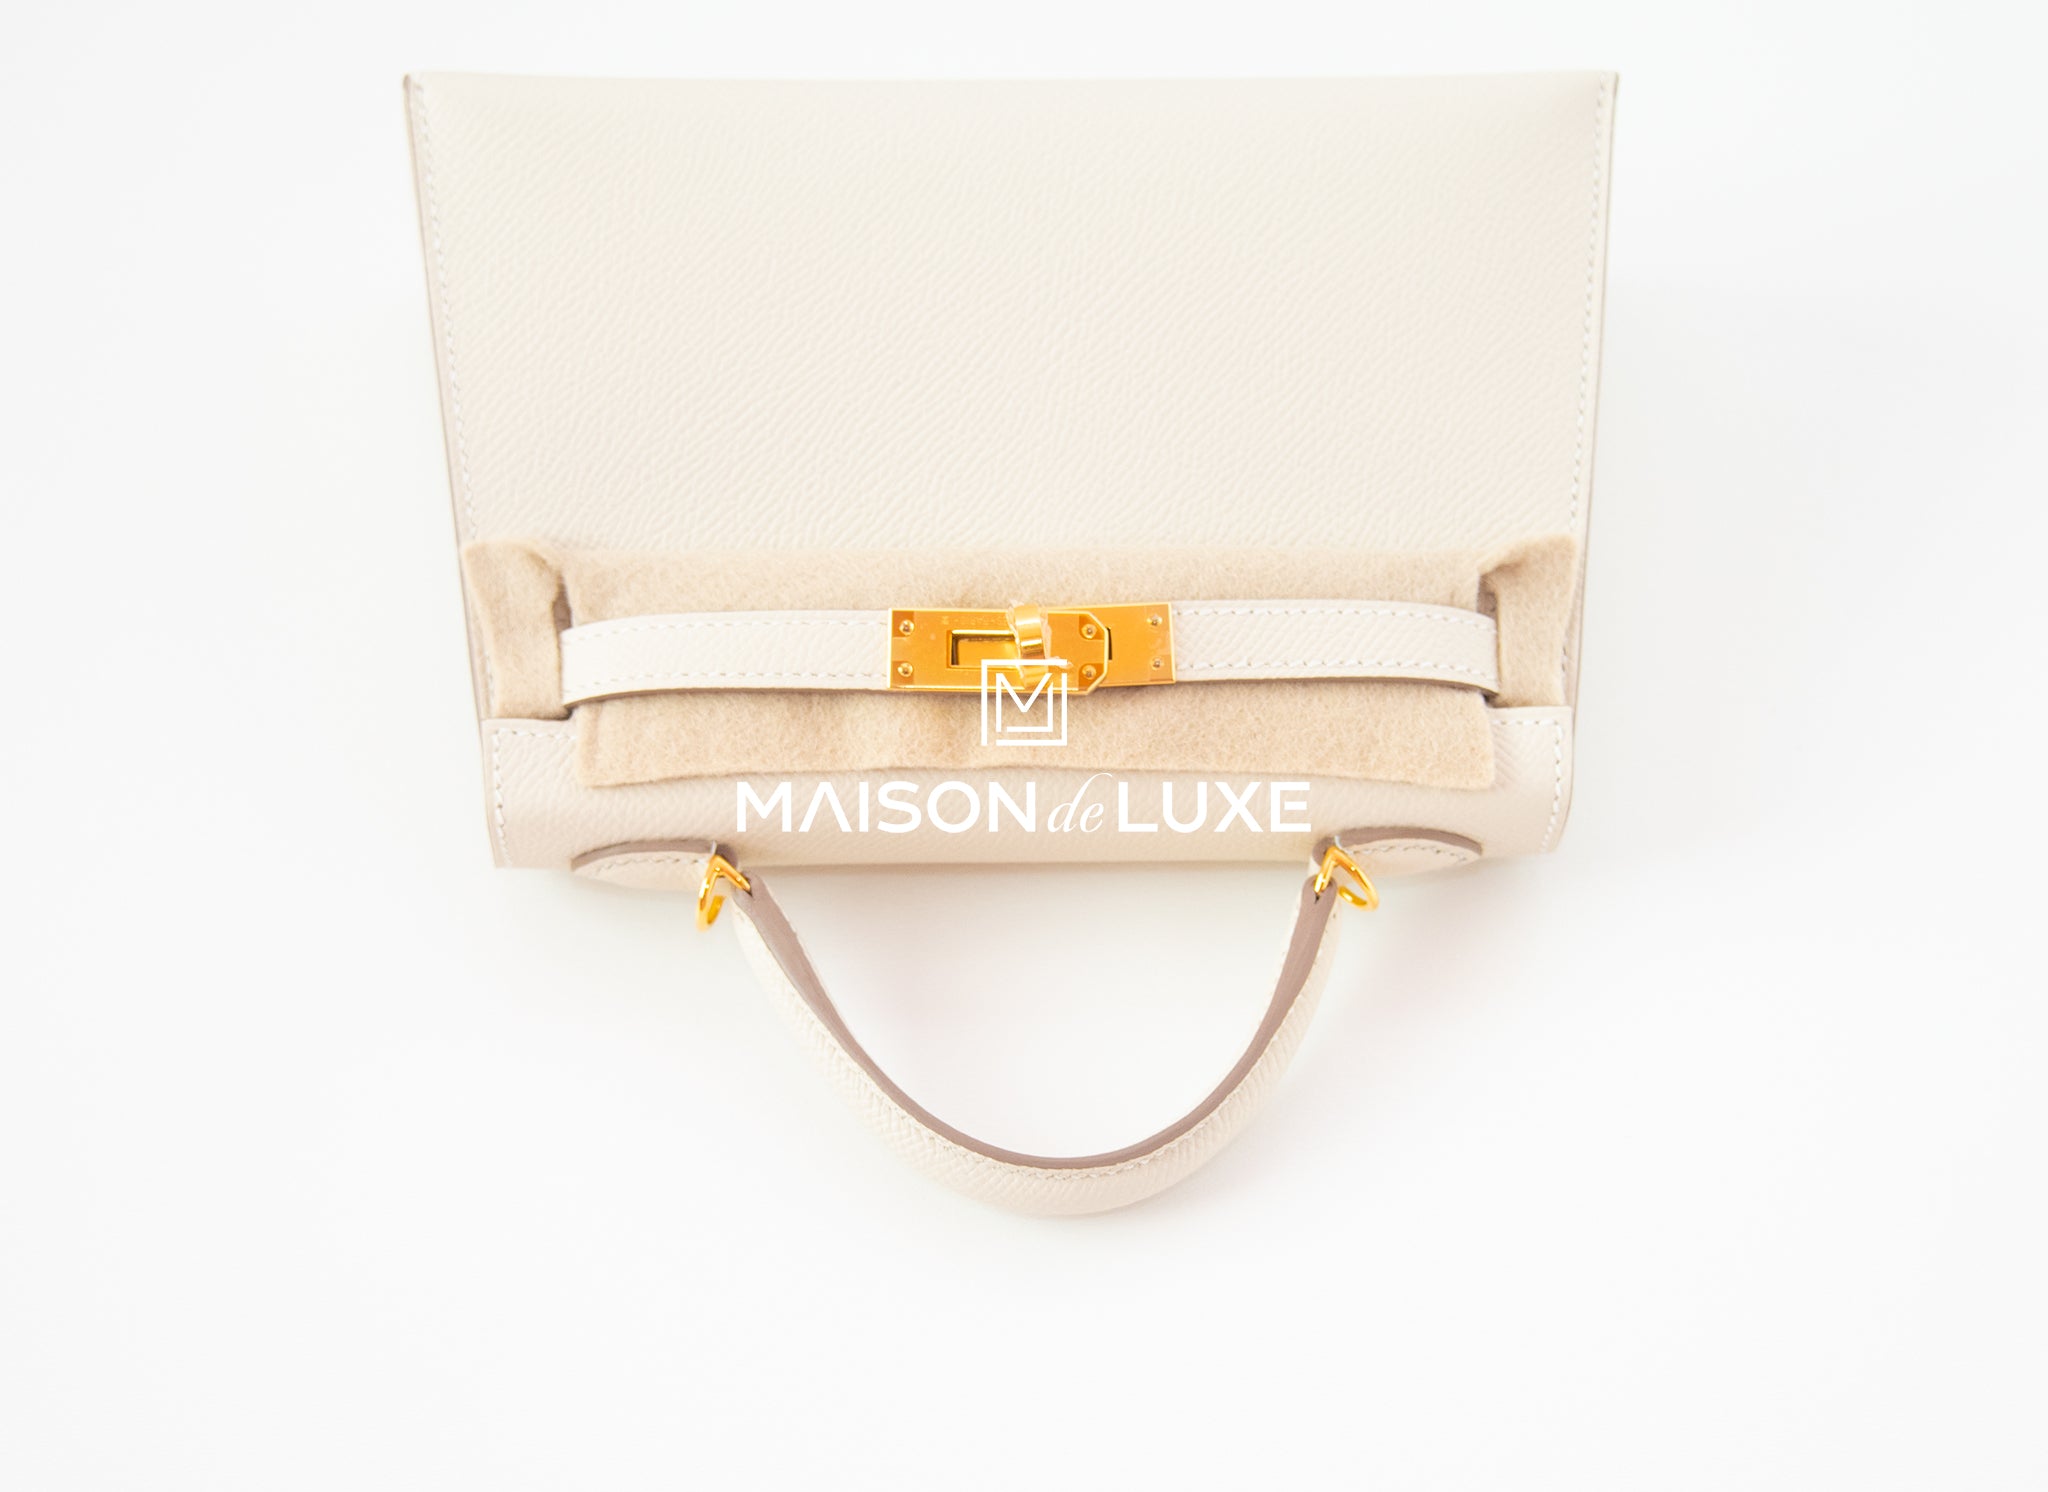 Hermes Craie Kelly 20cm Mini Off White Limited Edition VIP Shoulder Bag